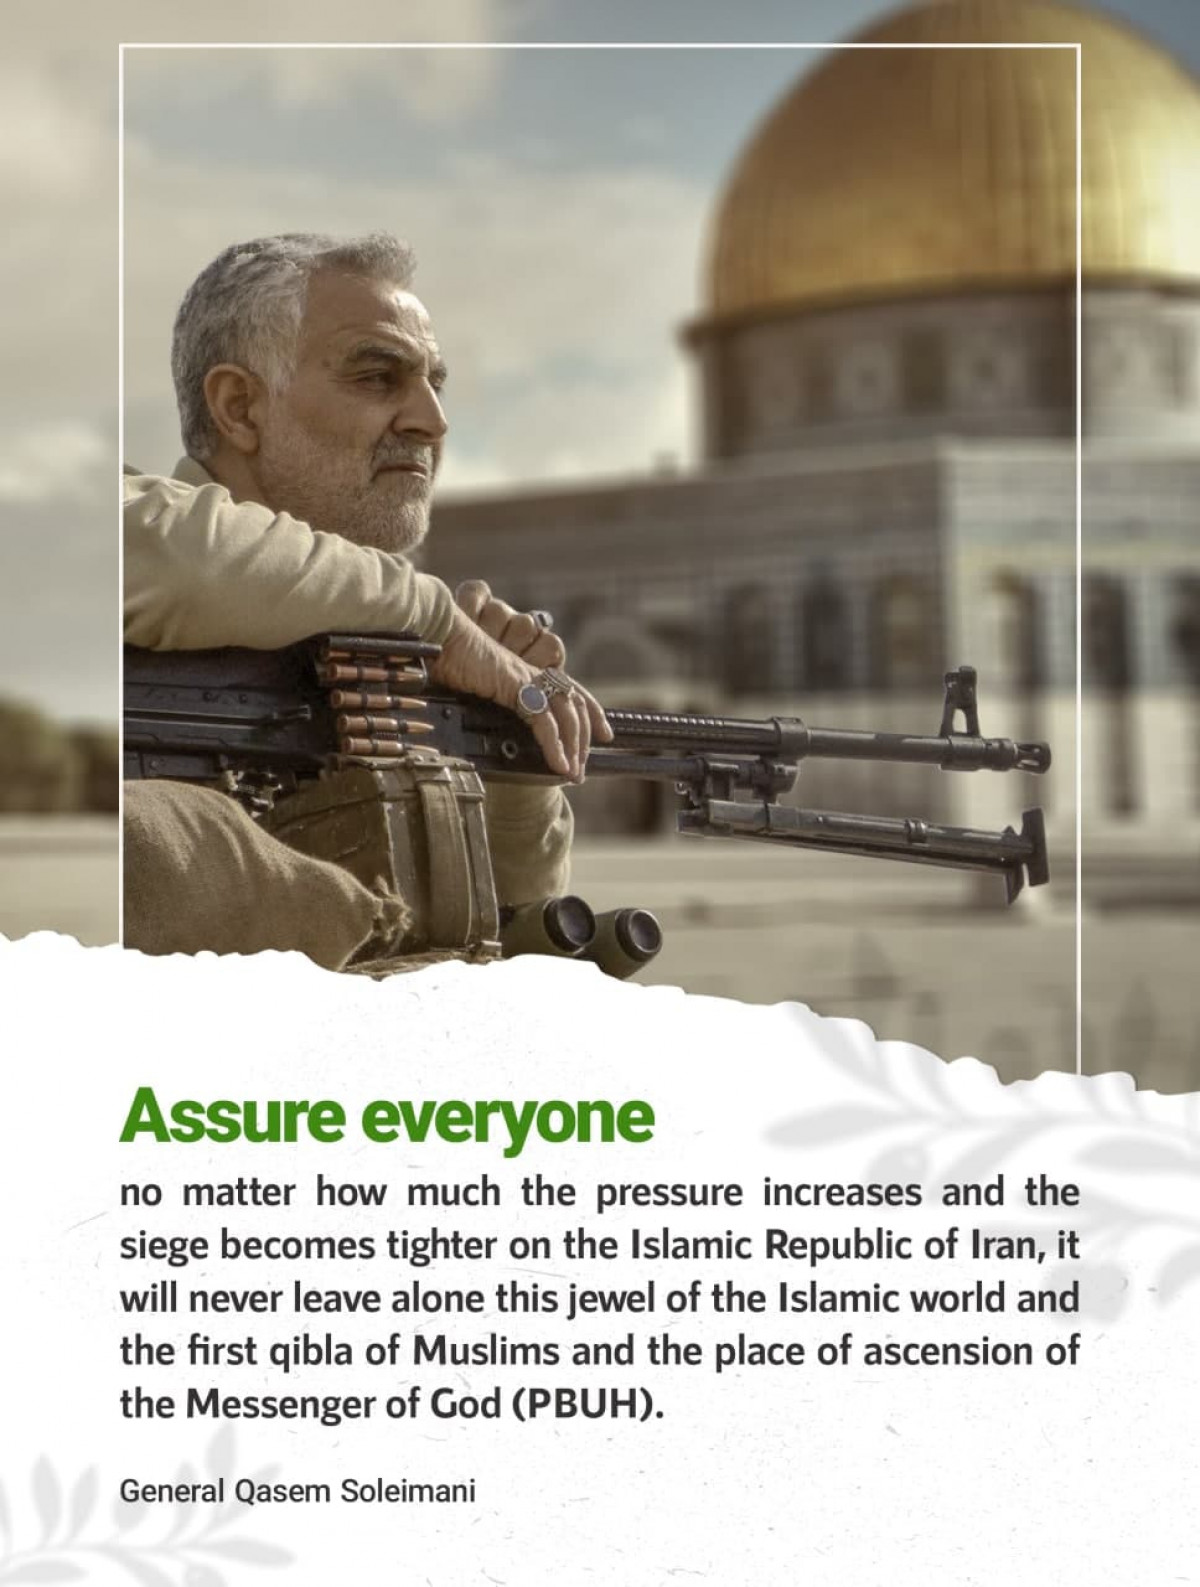 General Qasem Soleimani: Assure everyone